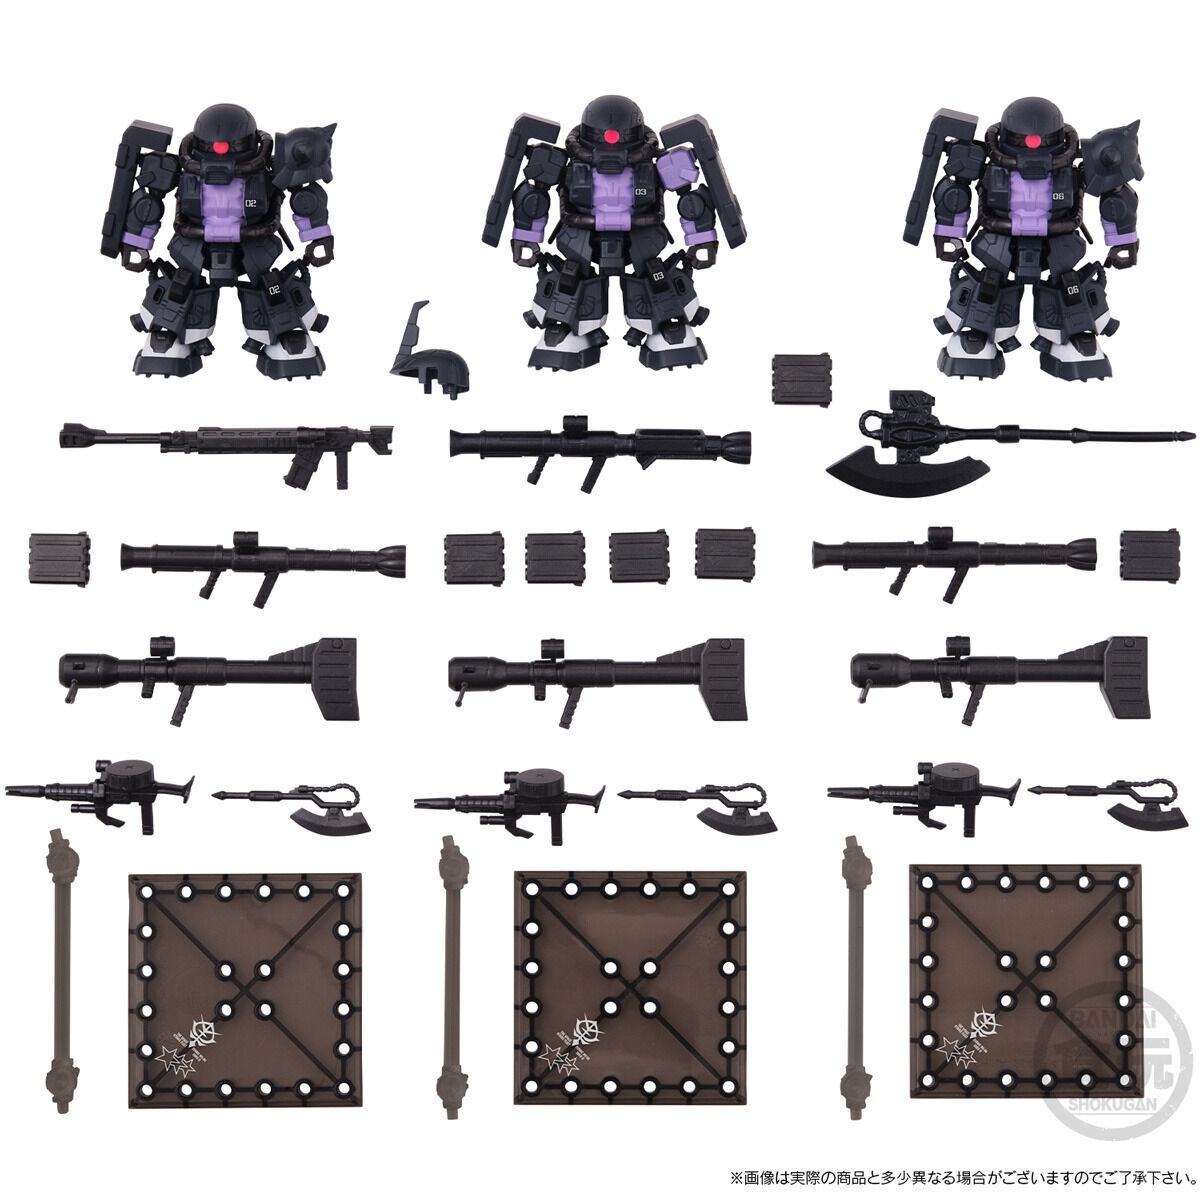 MOBILITY JOINT GUNDAM 黒い三連星 高機動型ザクII 3体セット